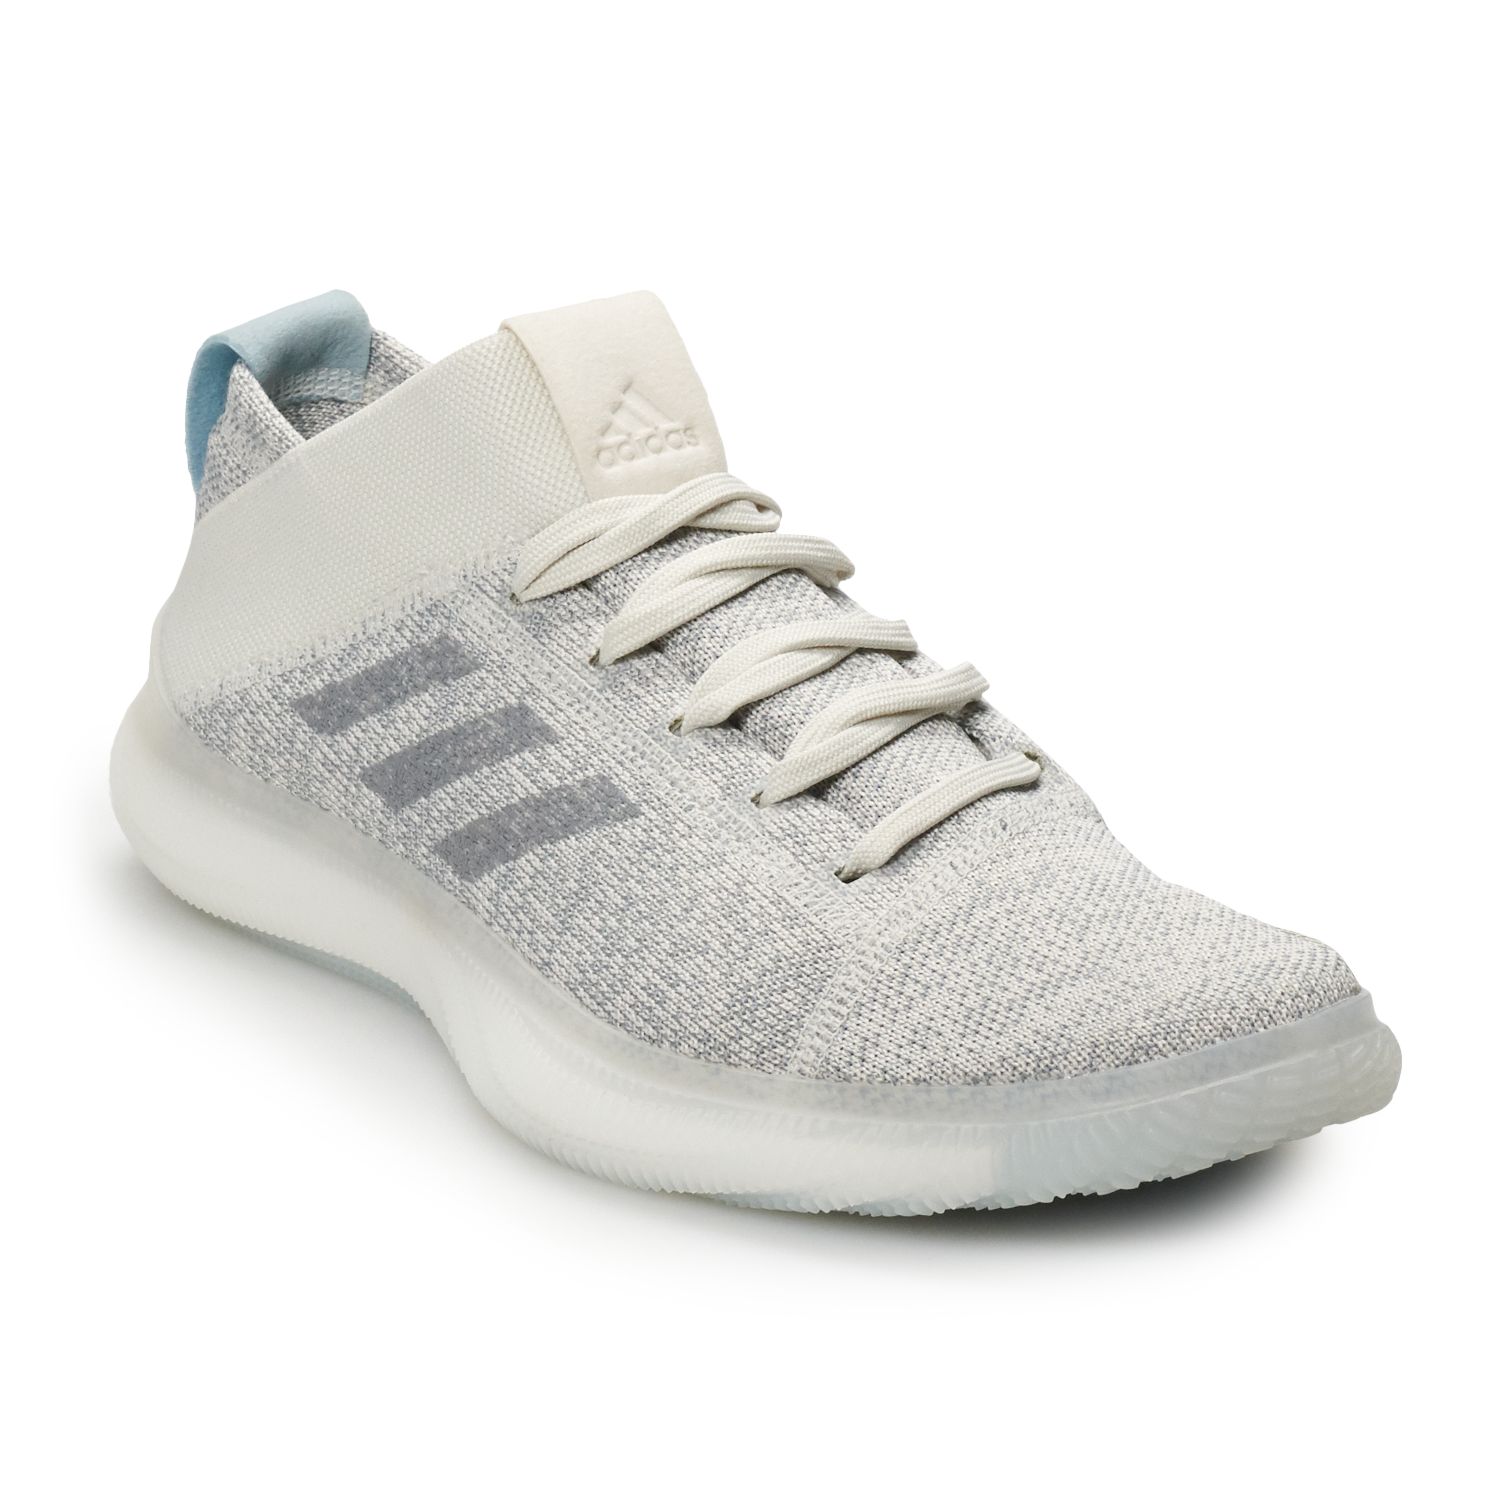 adidas pureboost men's training shoes